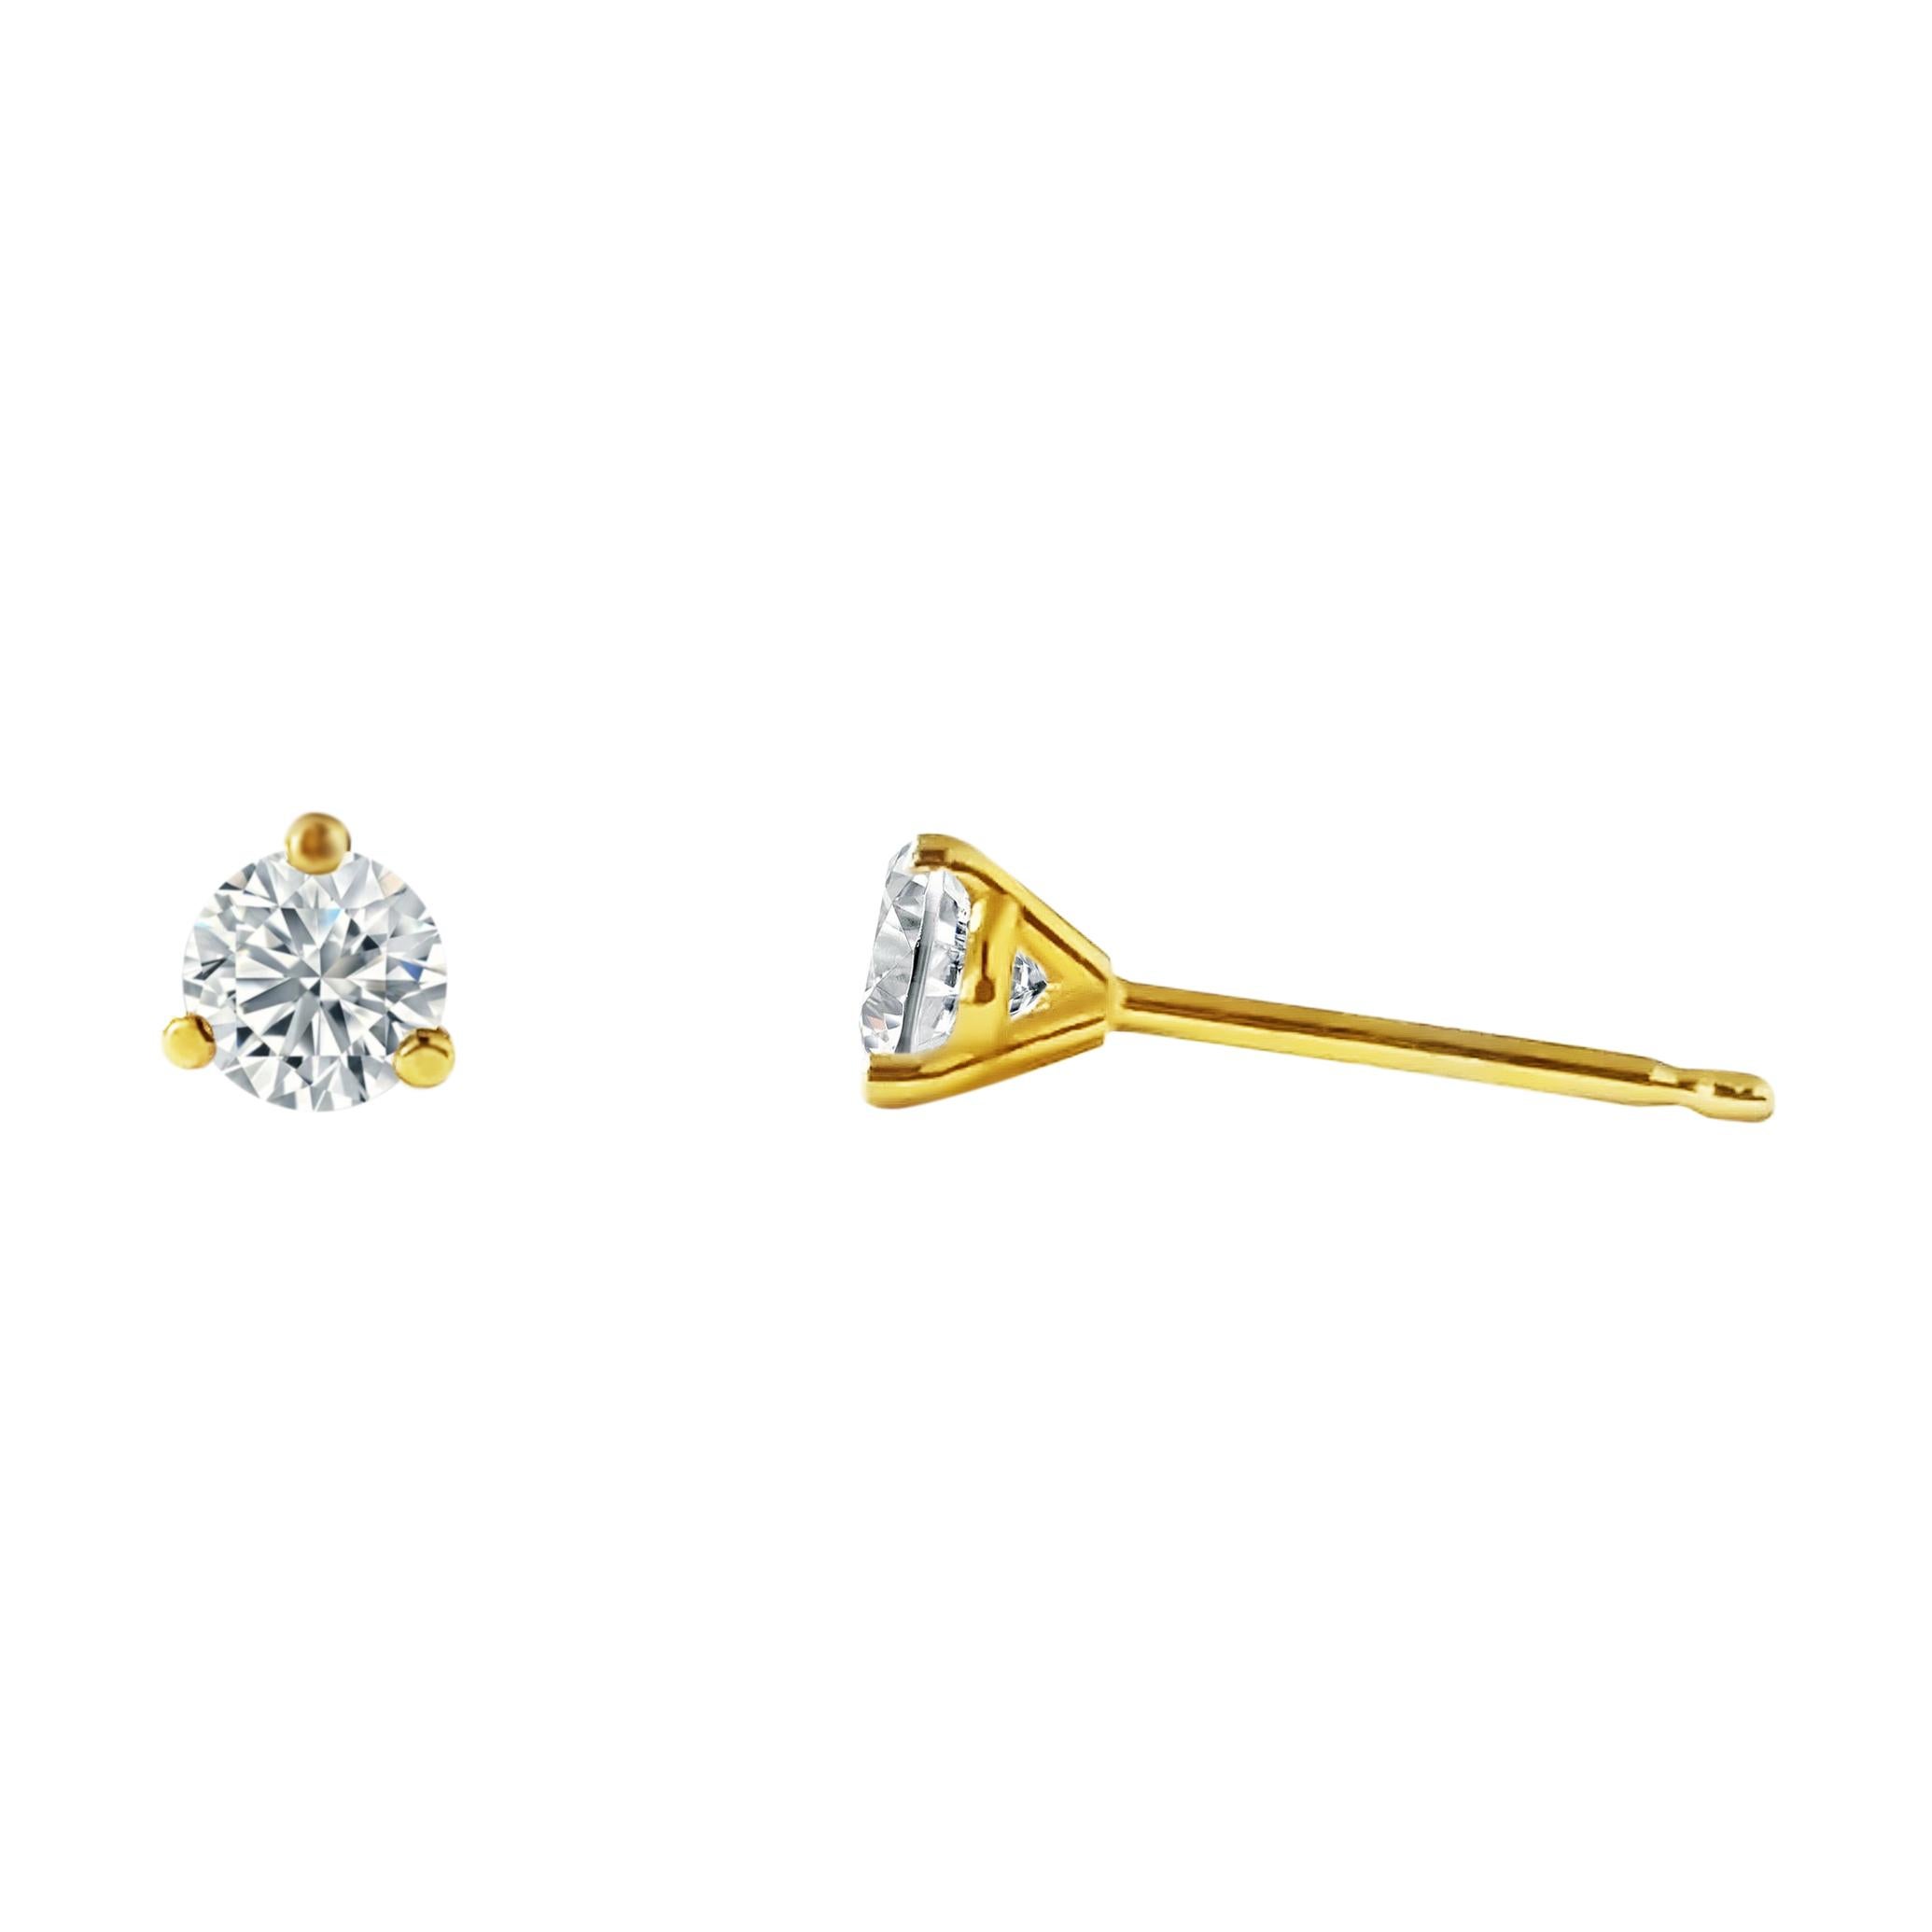 30 Carat Diamond Stud Earrings 14K Yellow Gold For Sale 2